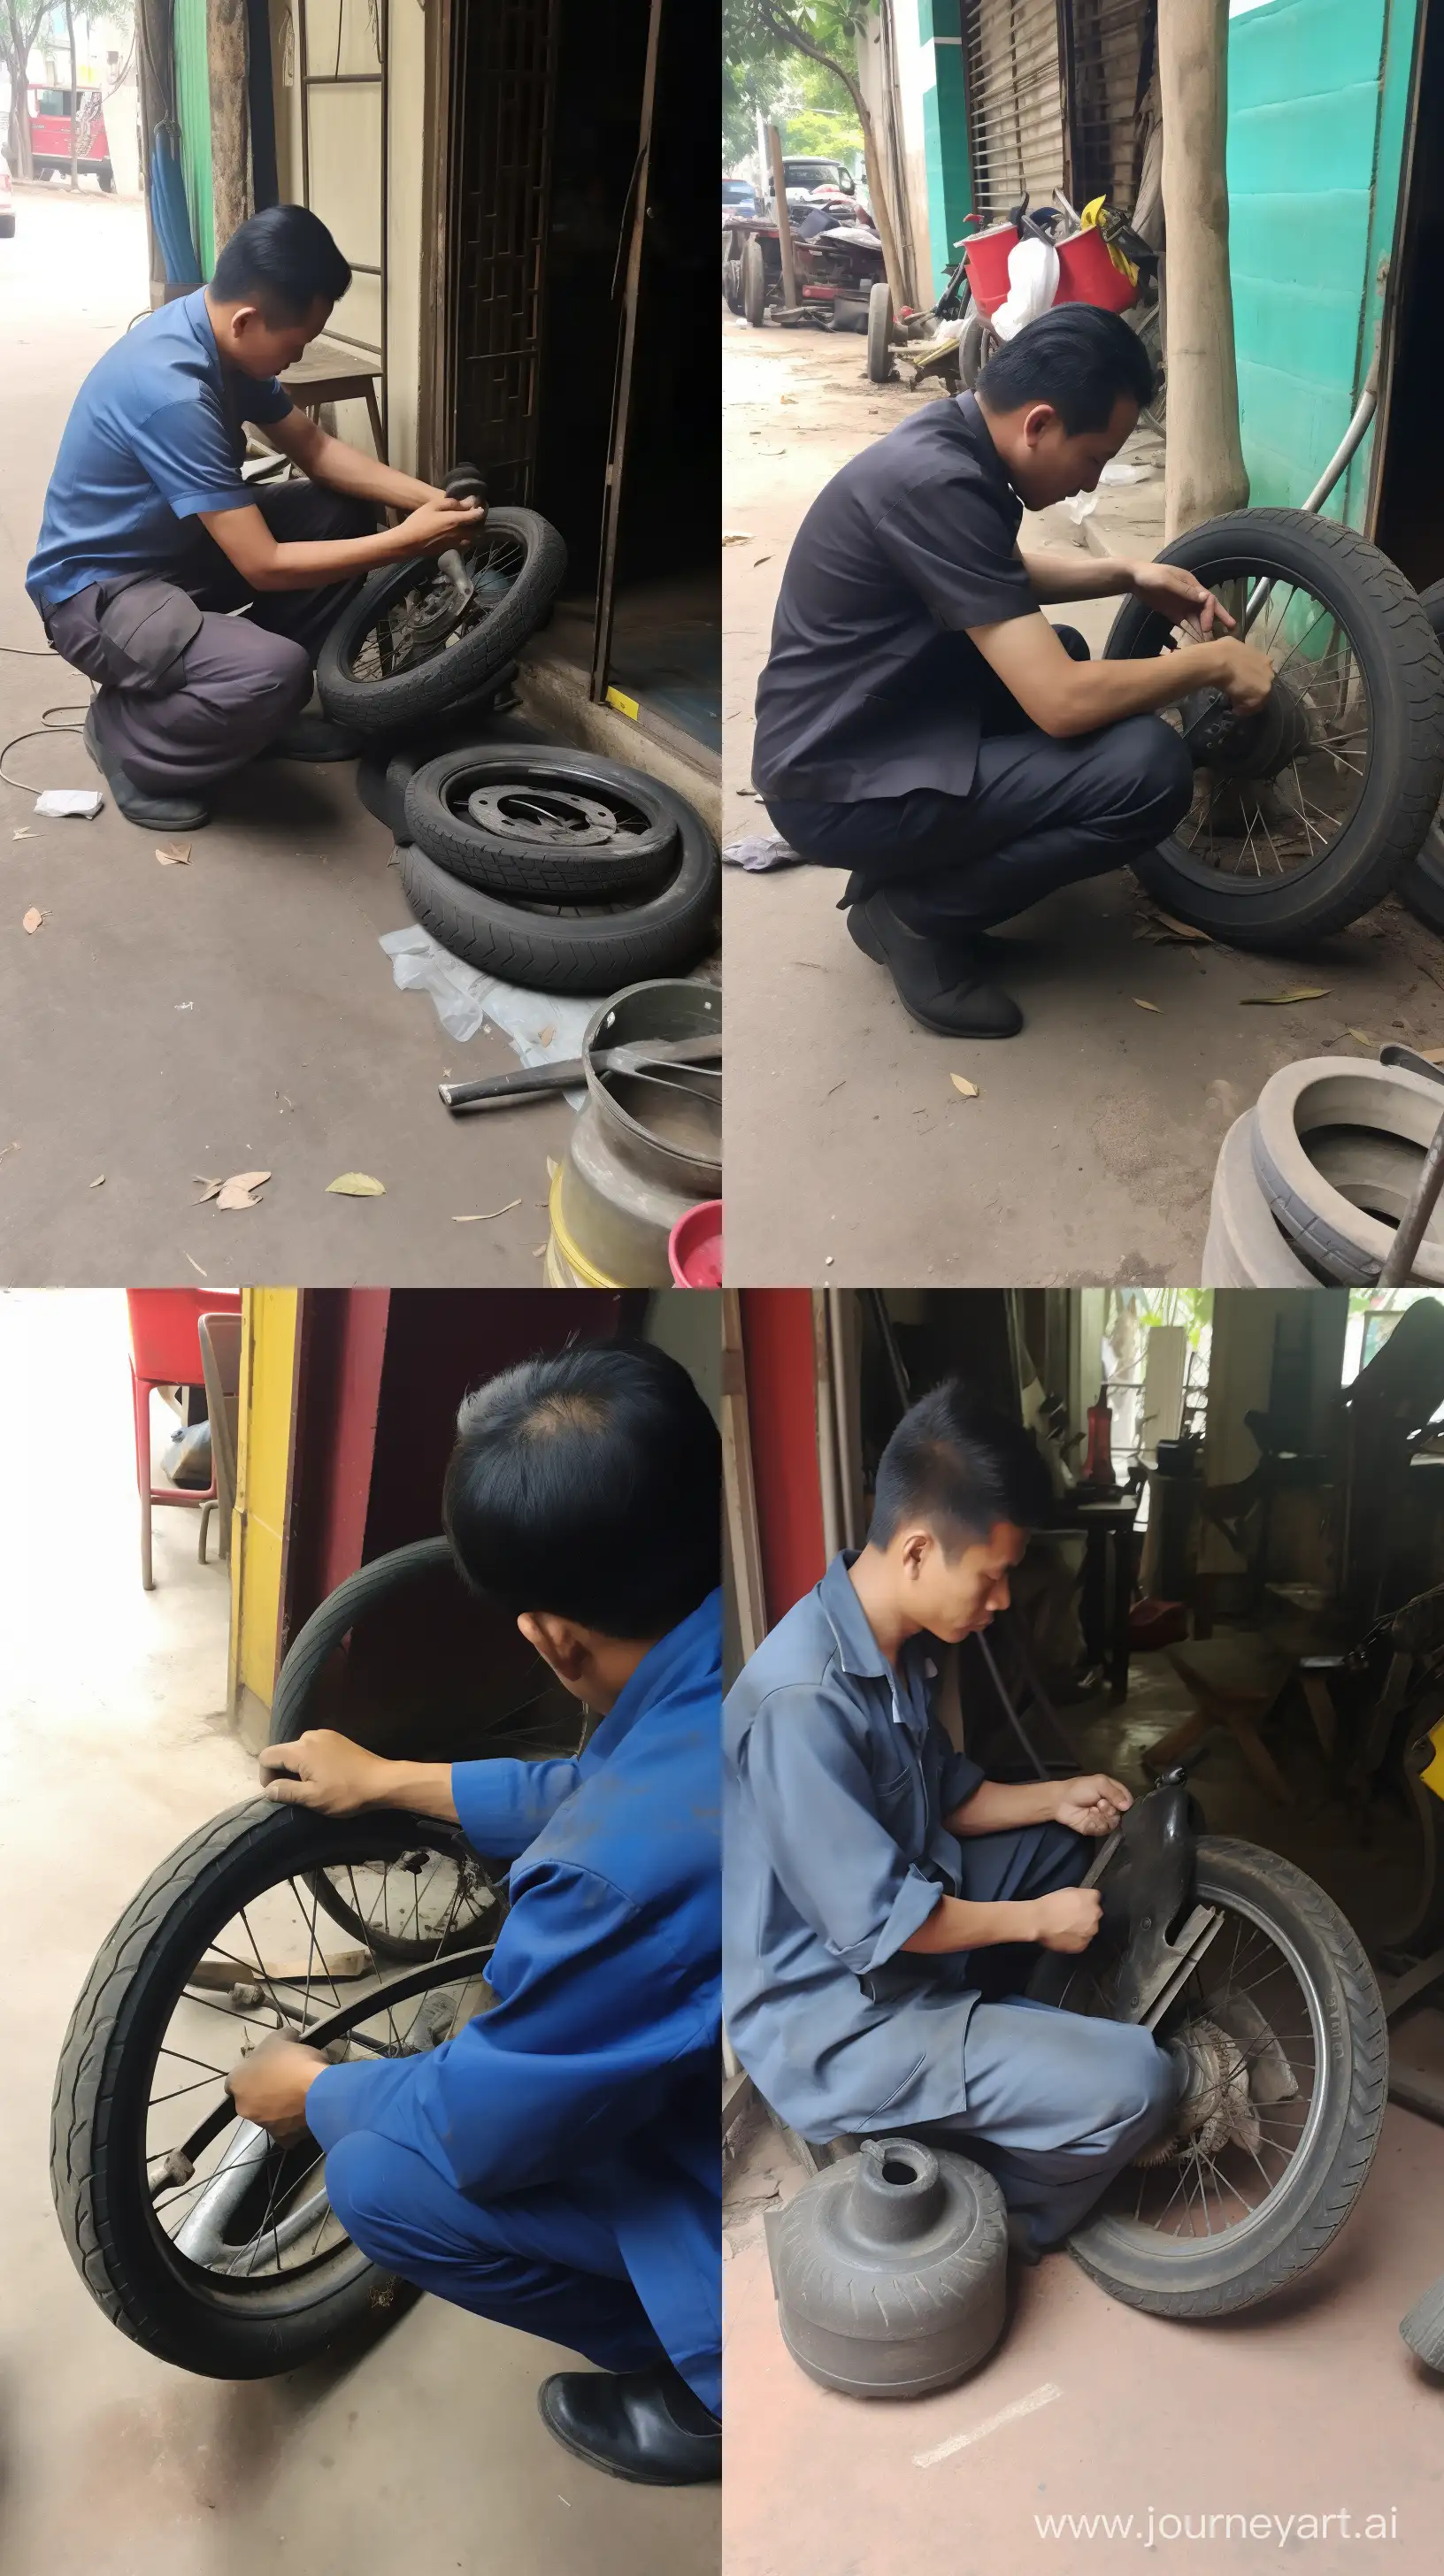 Hanoi-Motorbike-Repair-Shop-Offers-Expert-Assistance-for-Flat-Tire-Repairs